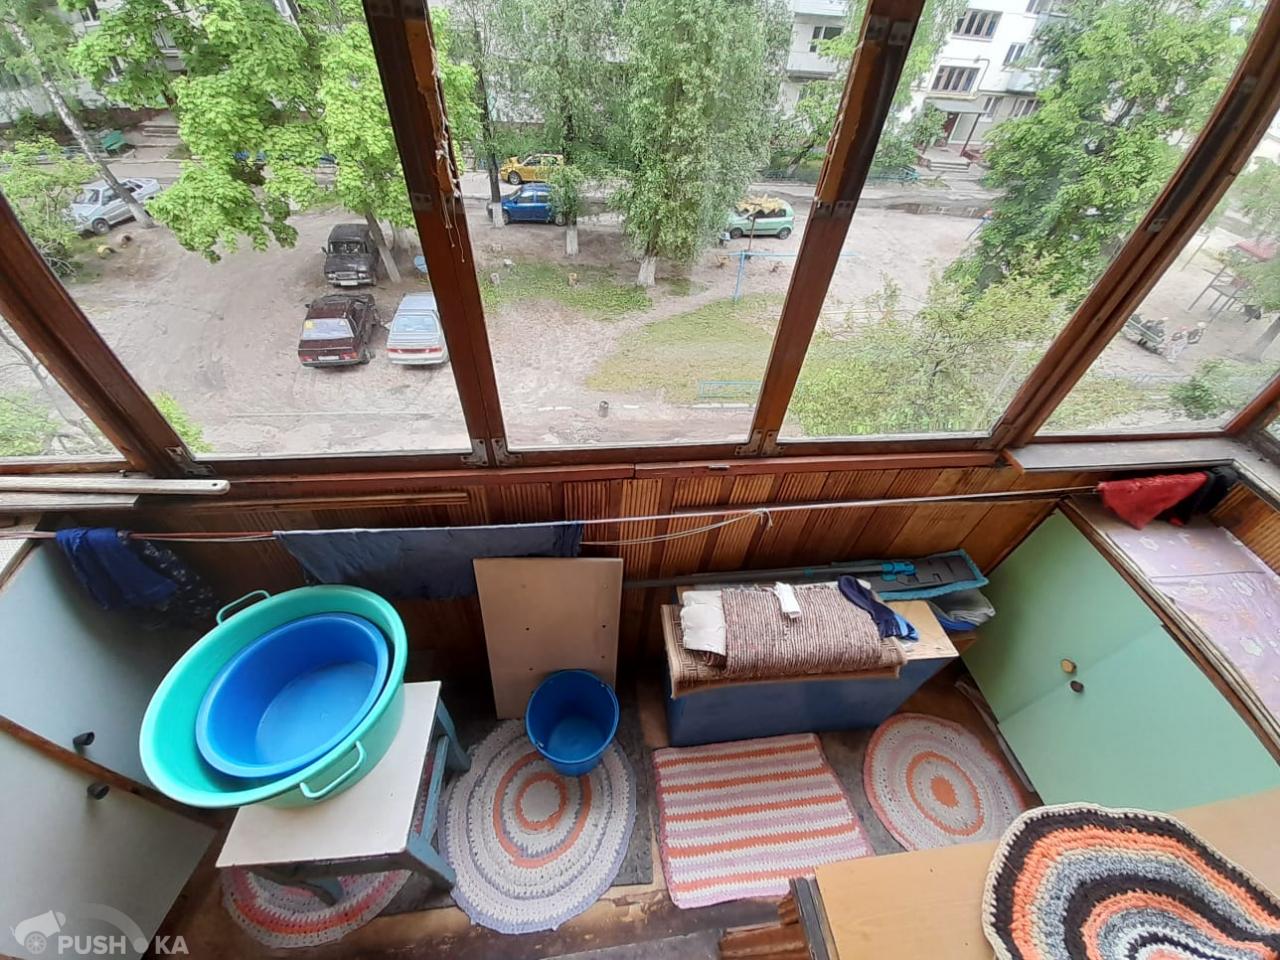 Продаётся 2-комнатная квартира 45.0 кв.м. этаж 3/5 за 2 100 000 руб 